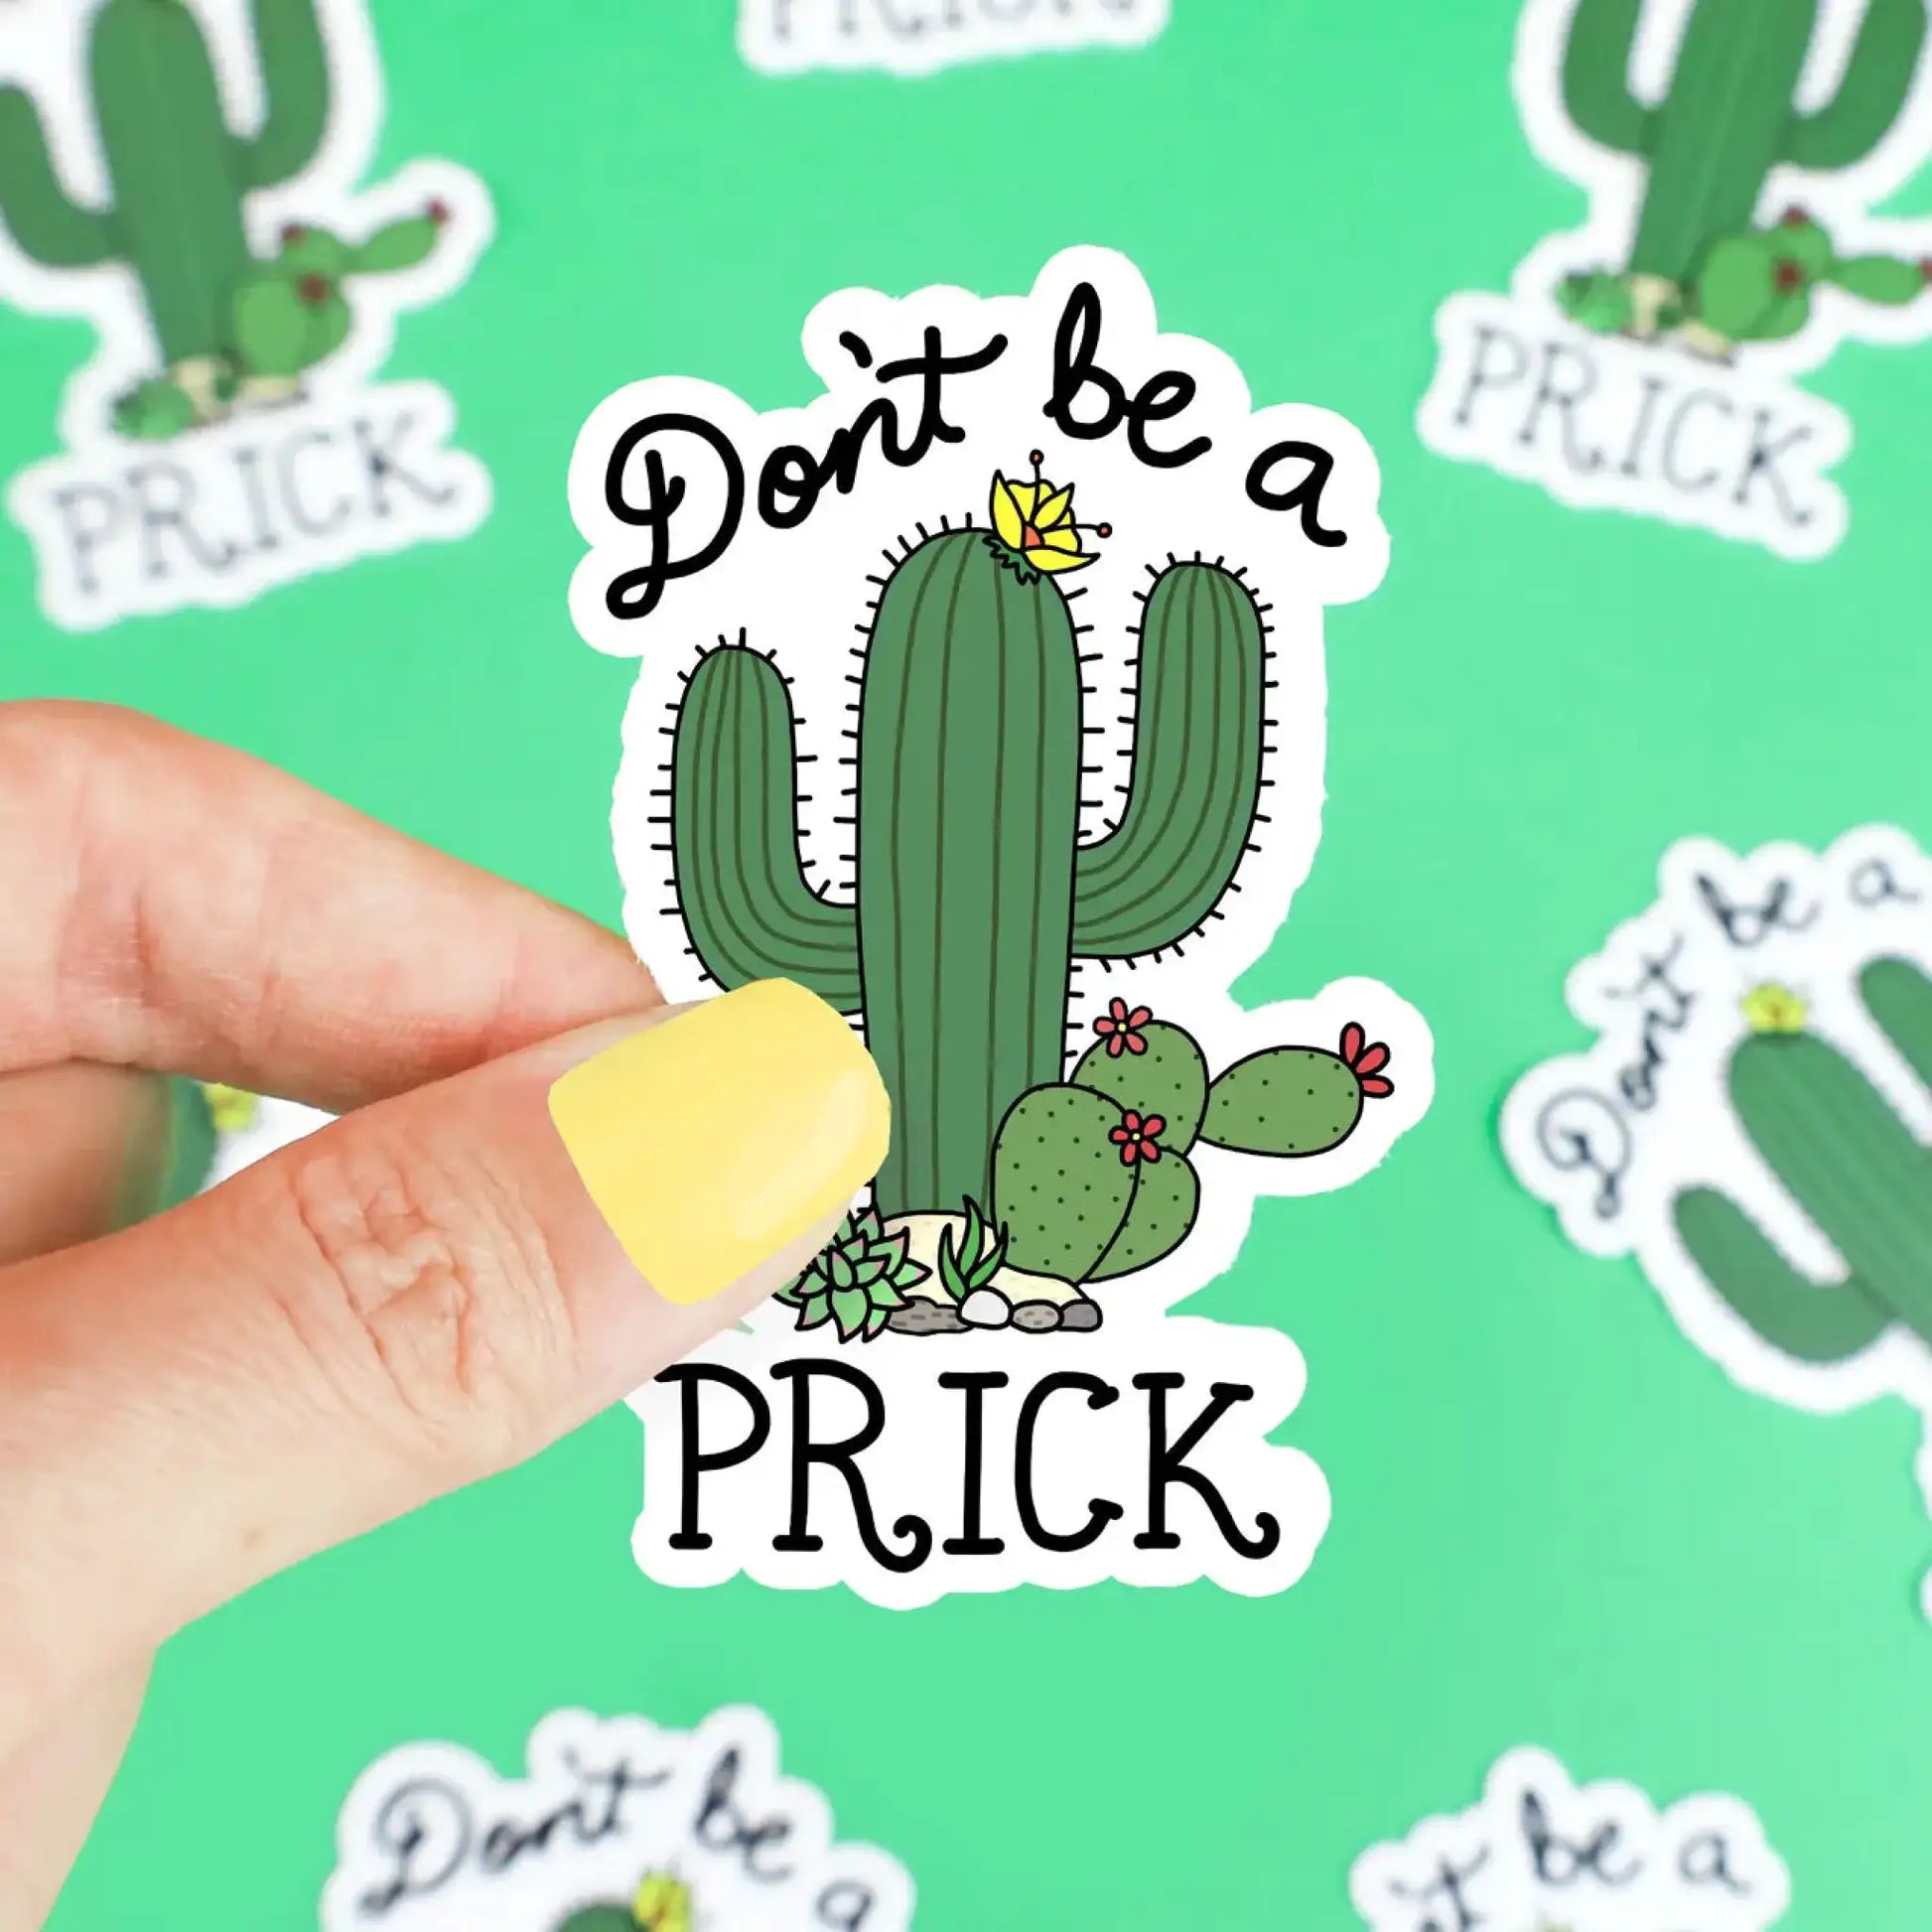 Don’t be a Prick vinyl sticker - Sticker